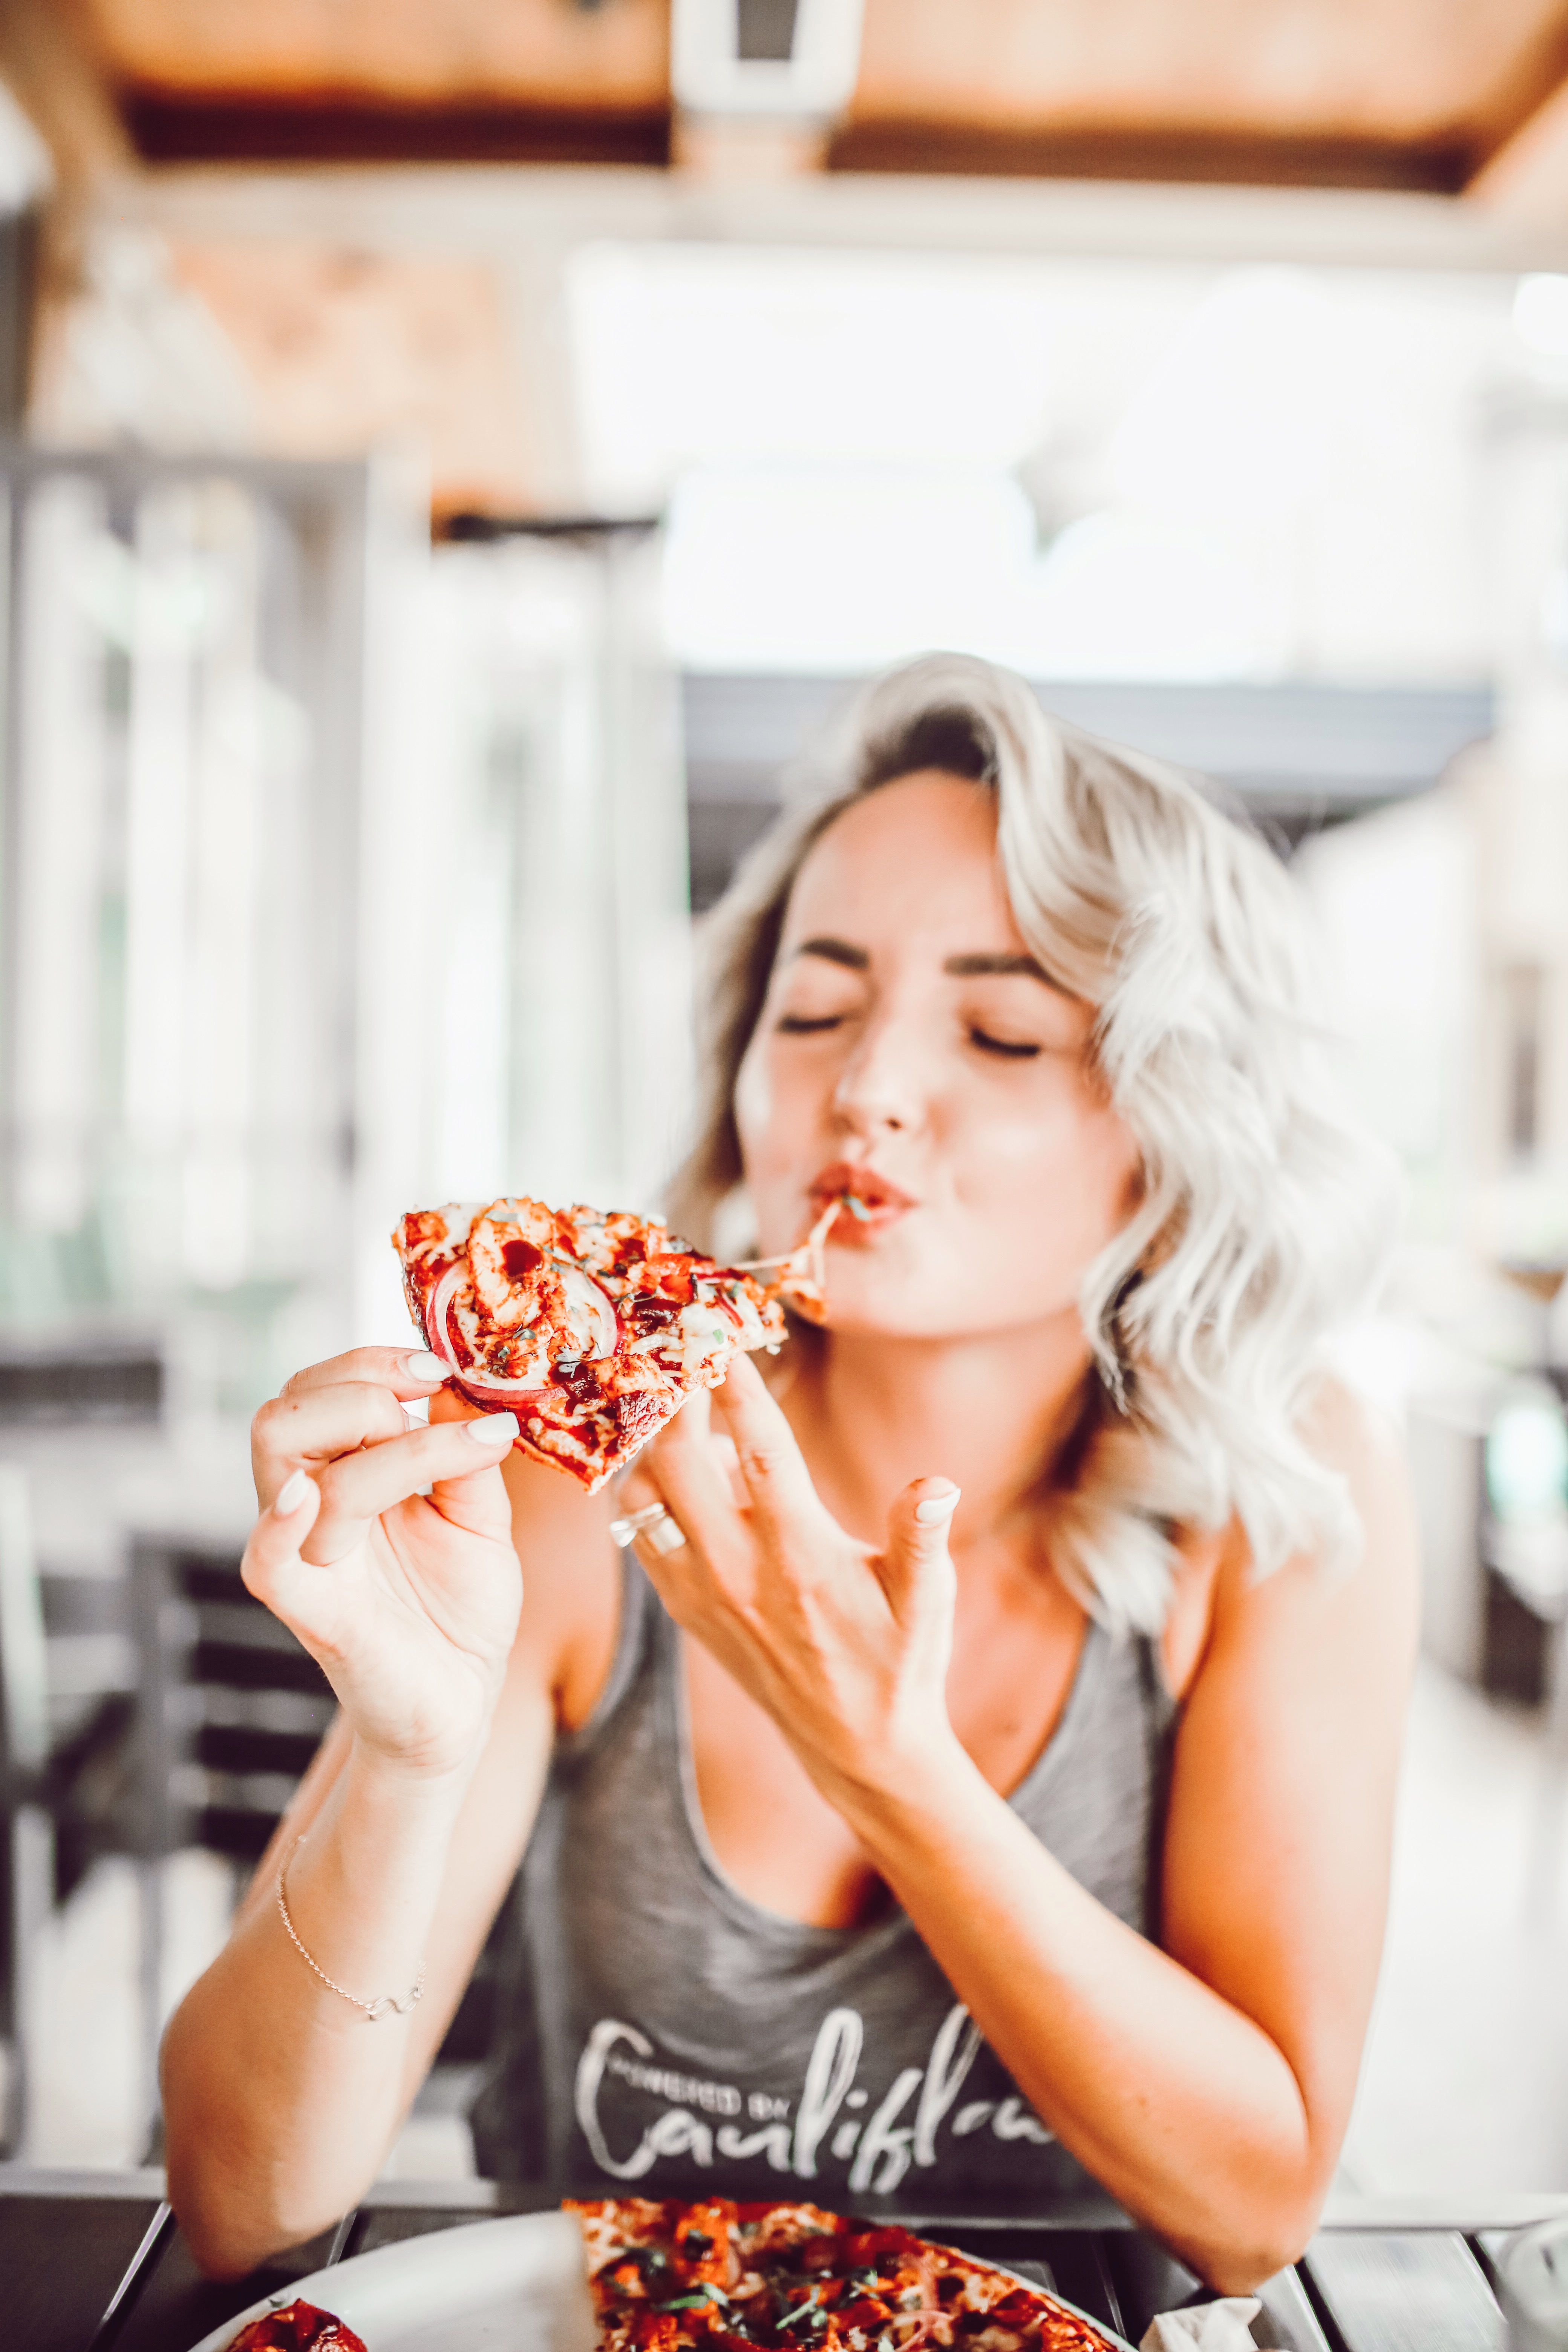 Alena Gidenko of modaprints.com shares her experience eating the new Cauliflower pizza crust